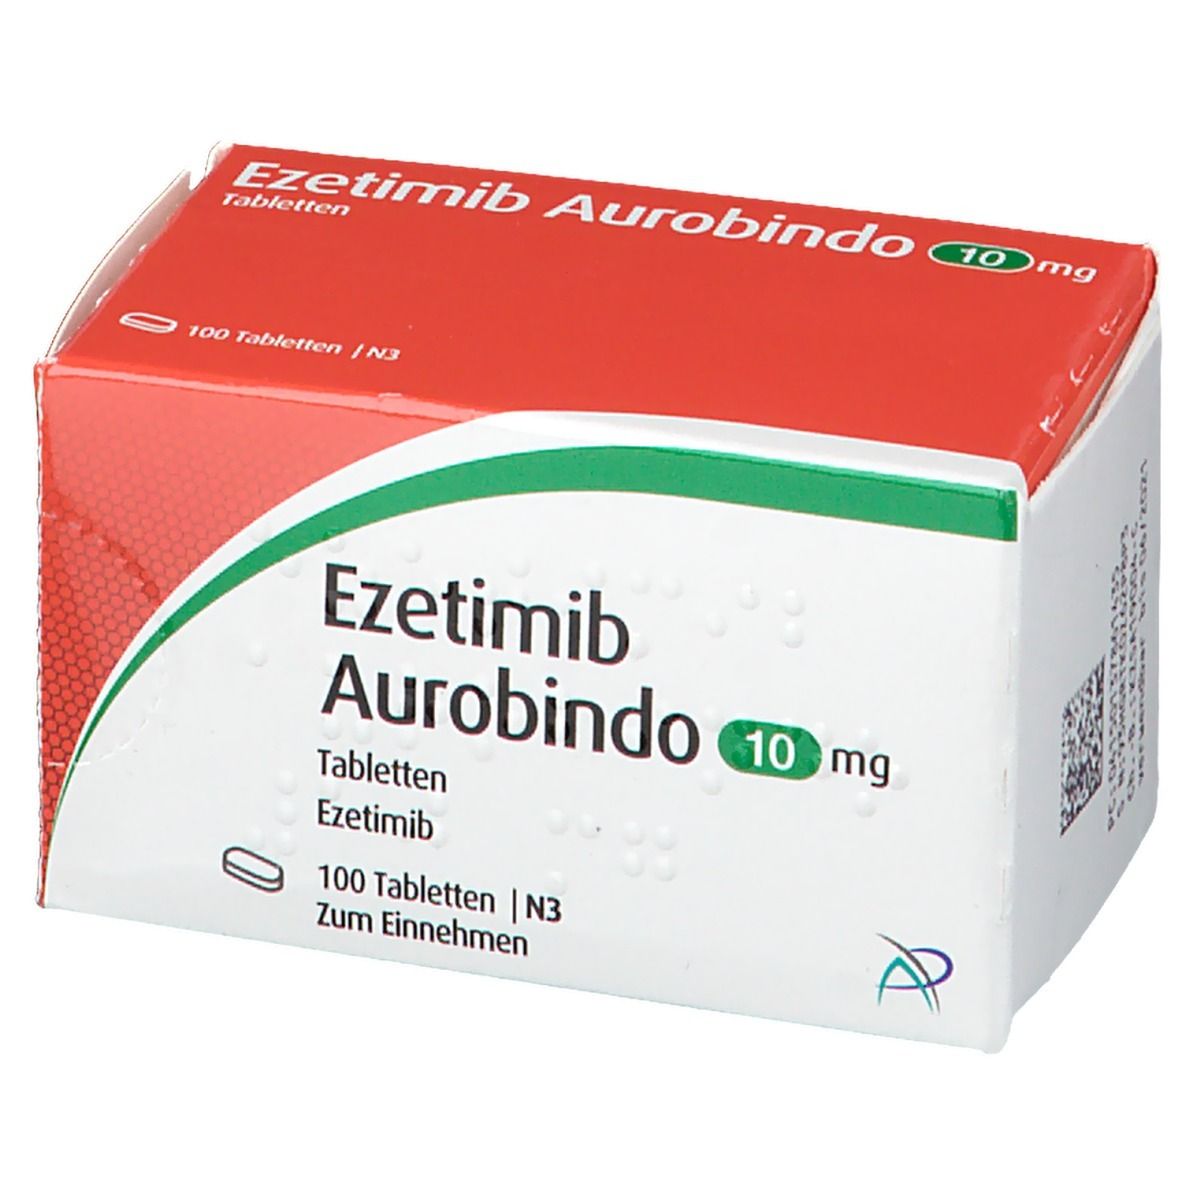 Ezetimib Aurobindo 10 mg